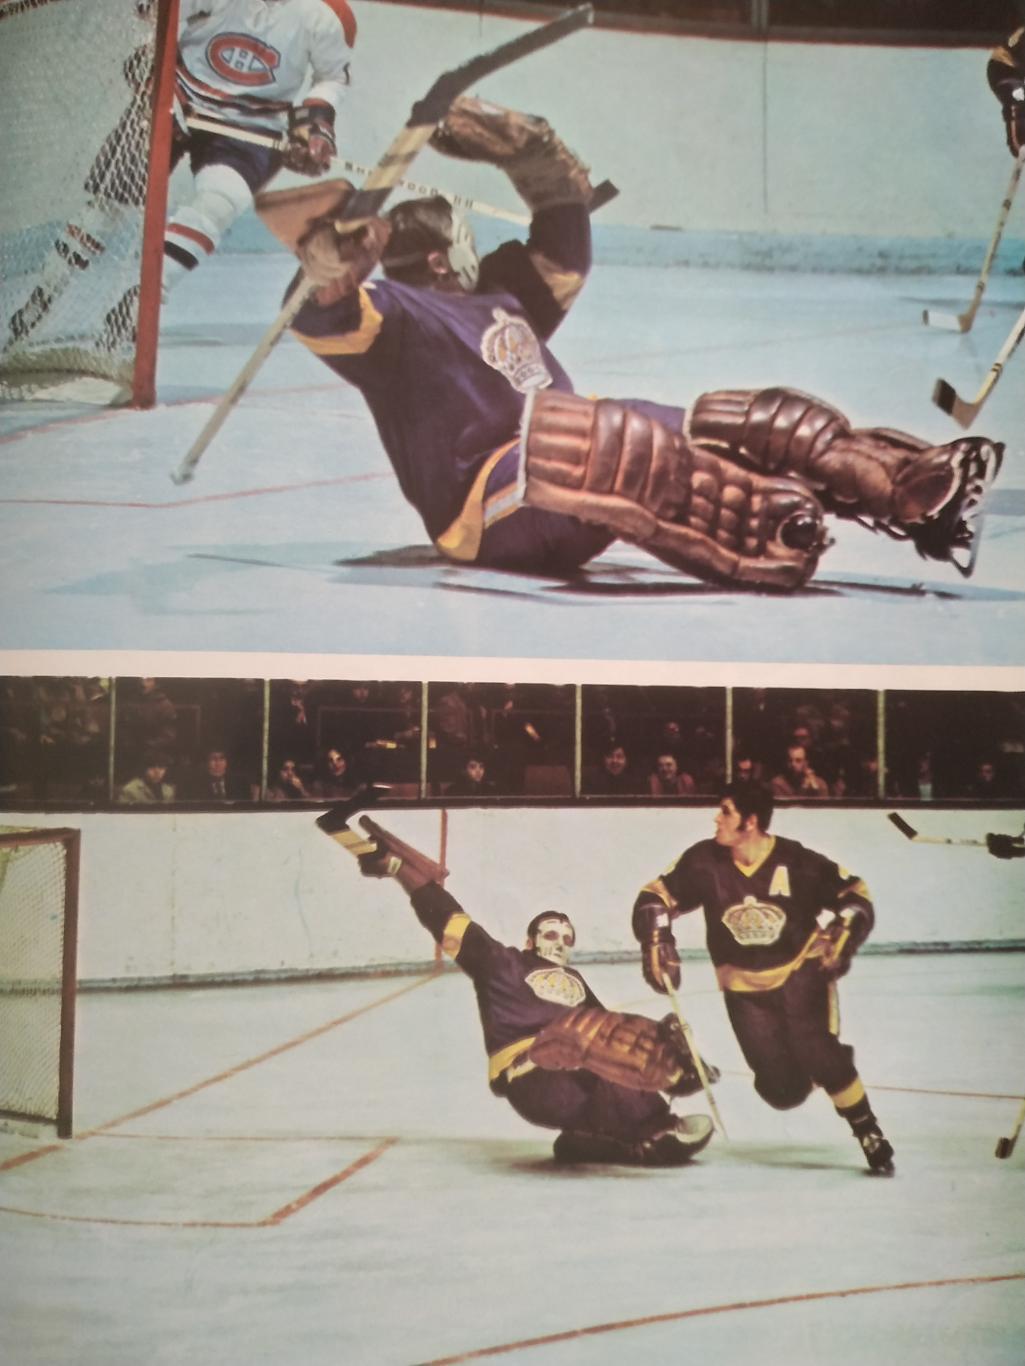 ХОККЕЙ ПРОГРАММА АЛЬБОМ ЛОС АНДЖЕЛЕС НХЛ NHL 1971 DEC.01 LOS ANGELES PROGRAM 6